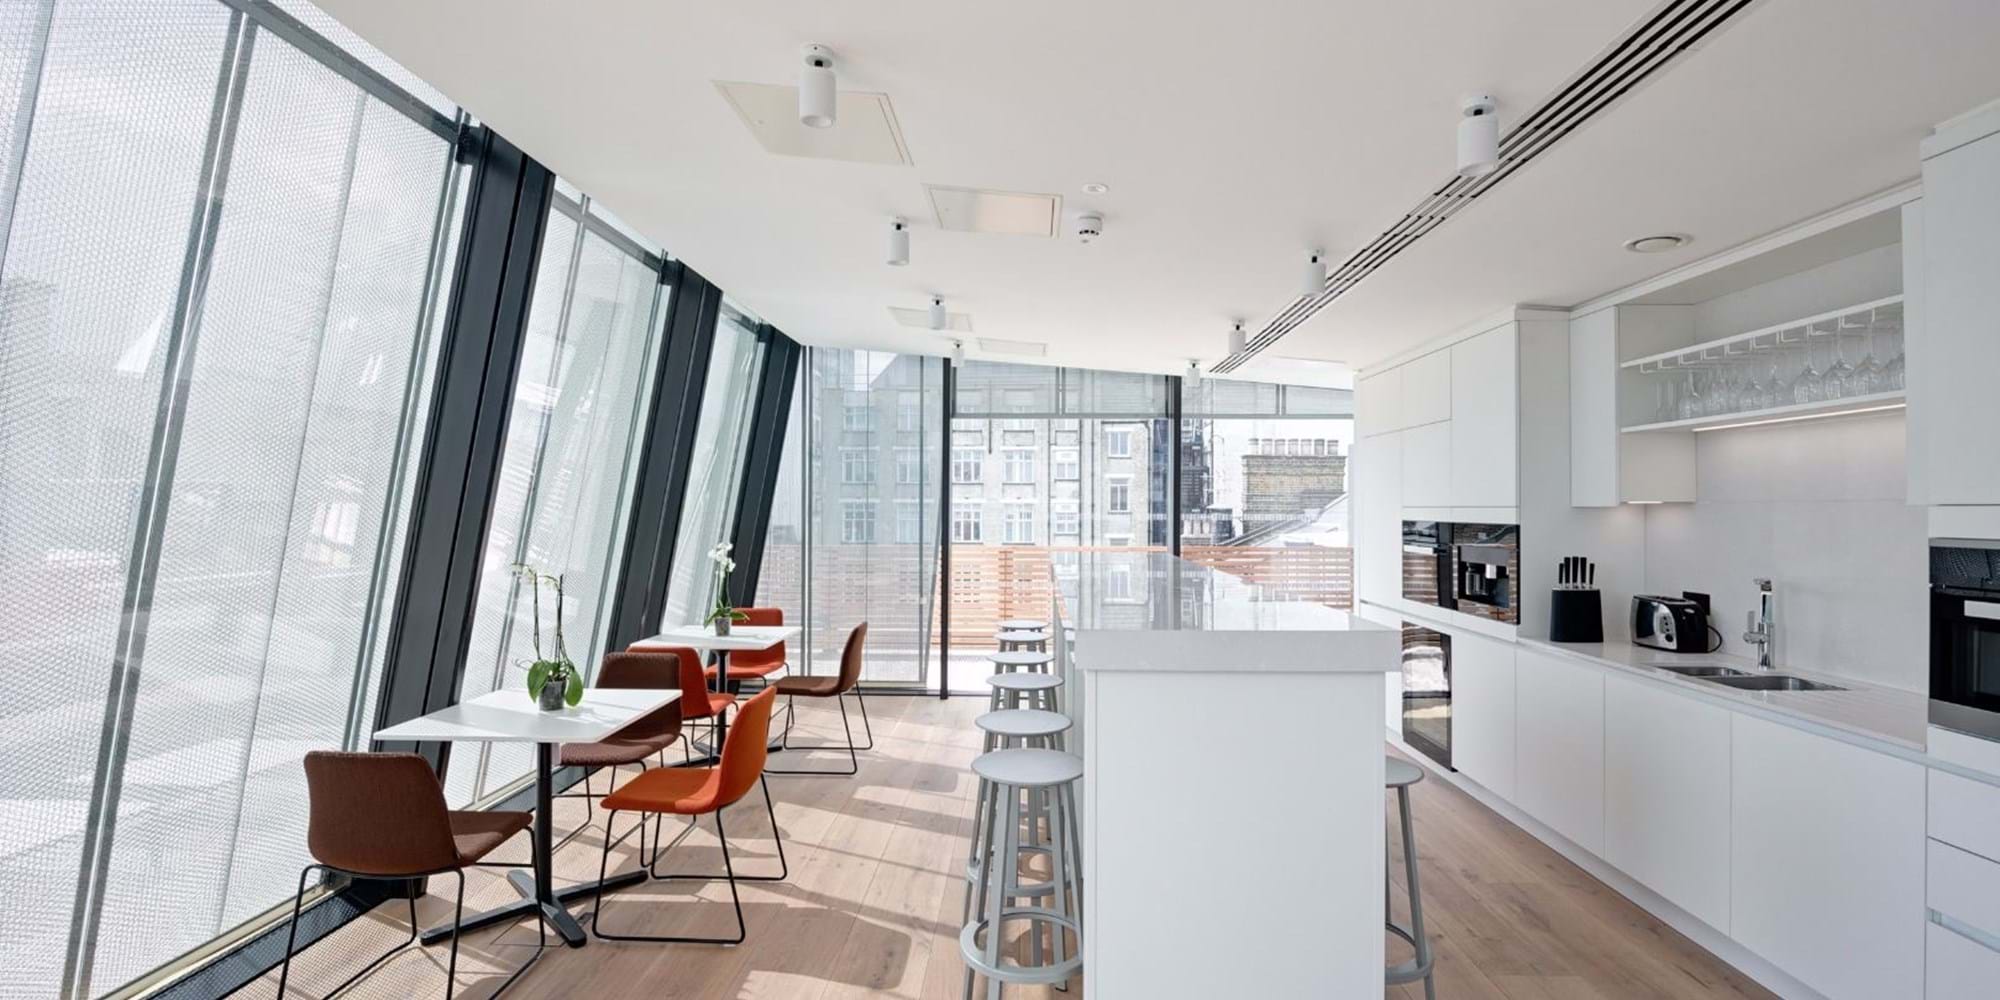 Modus Workspace office design, fit out and refurbishment - Craigewan - Graigewan 06 highres sRGB.jpg